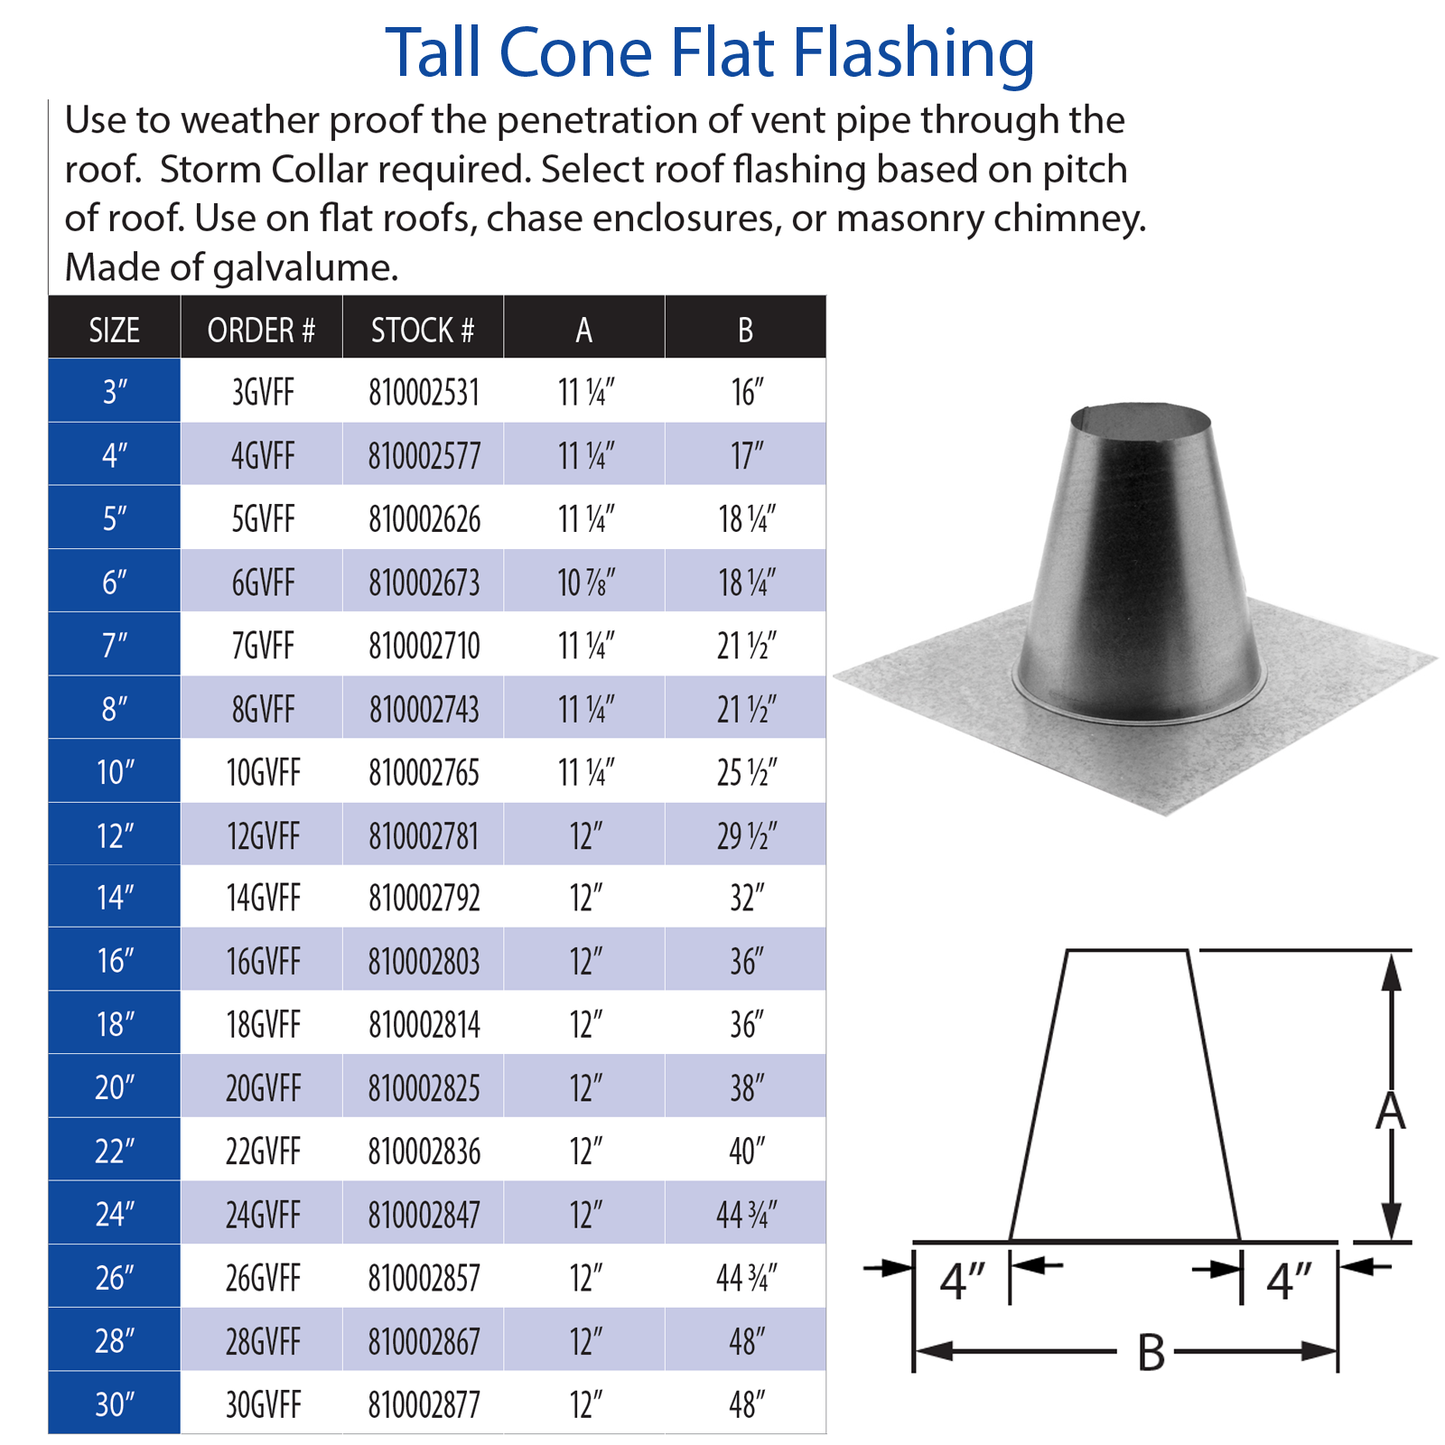 DuraVent Type B Tall Cone Flat Flashing | 3GVFF